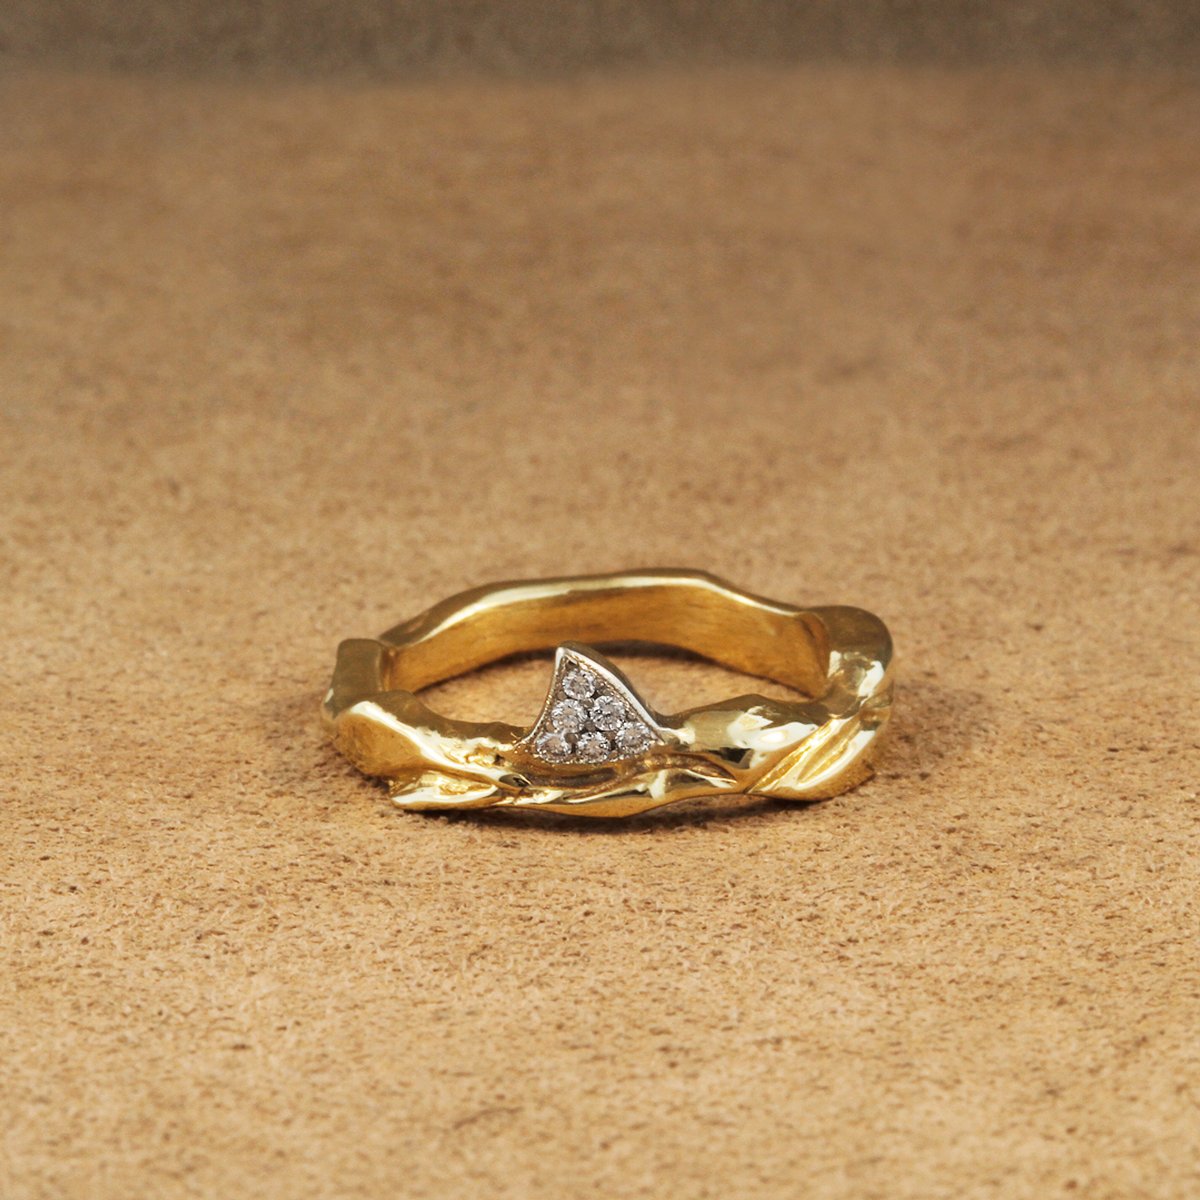 Shark-Fin Ring With Diamonds, 14k